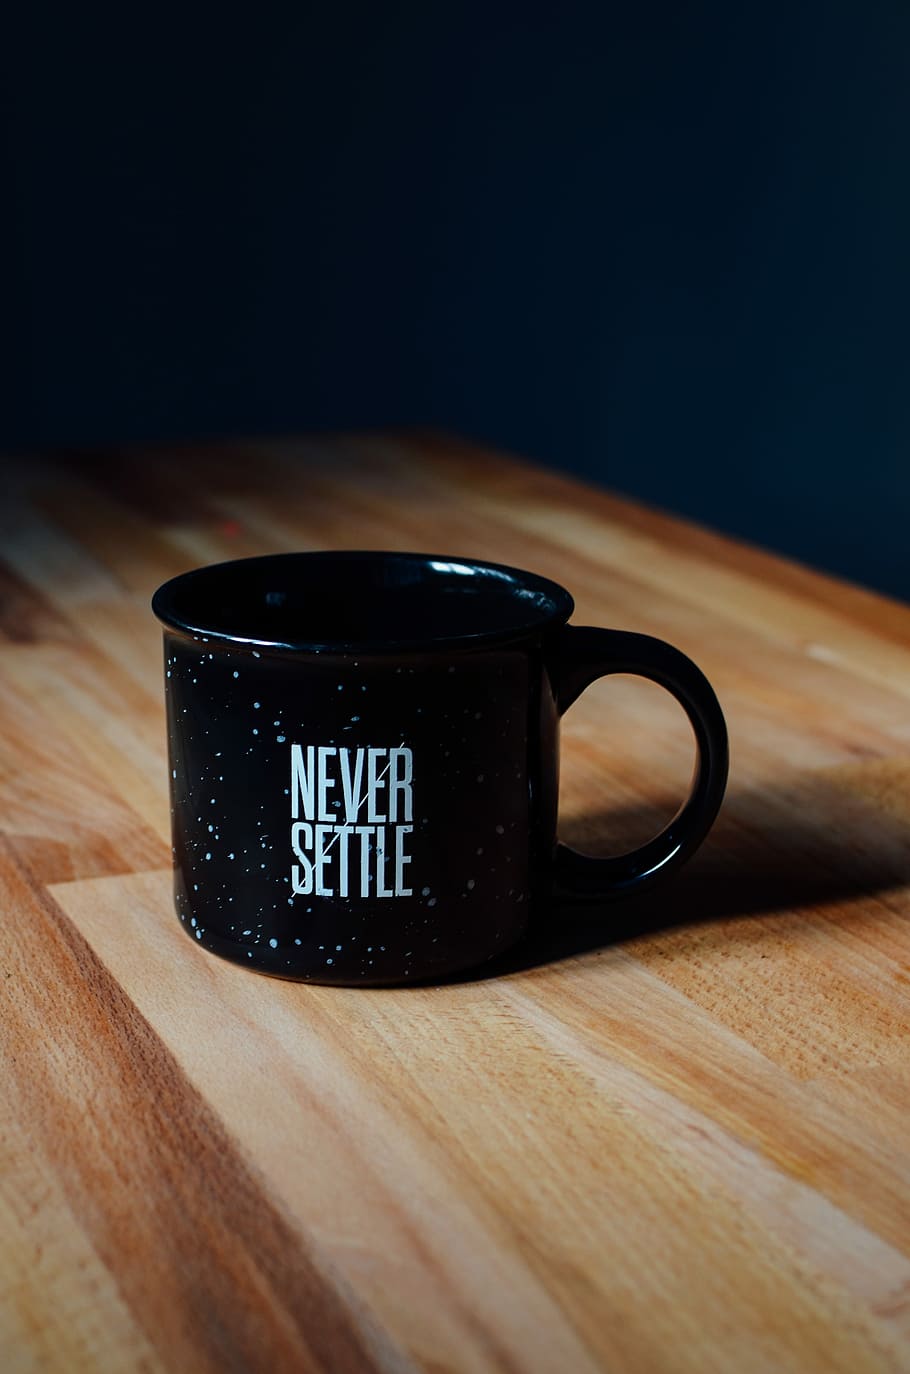 Black Ceramic Mug On Table, Black Never Settle Print - Never Settle Cup - HD Wallpaper 